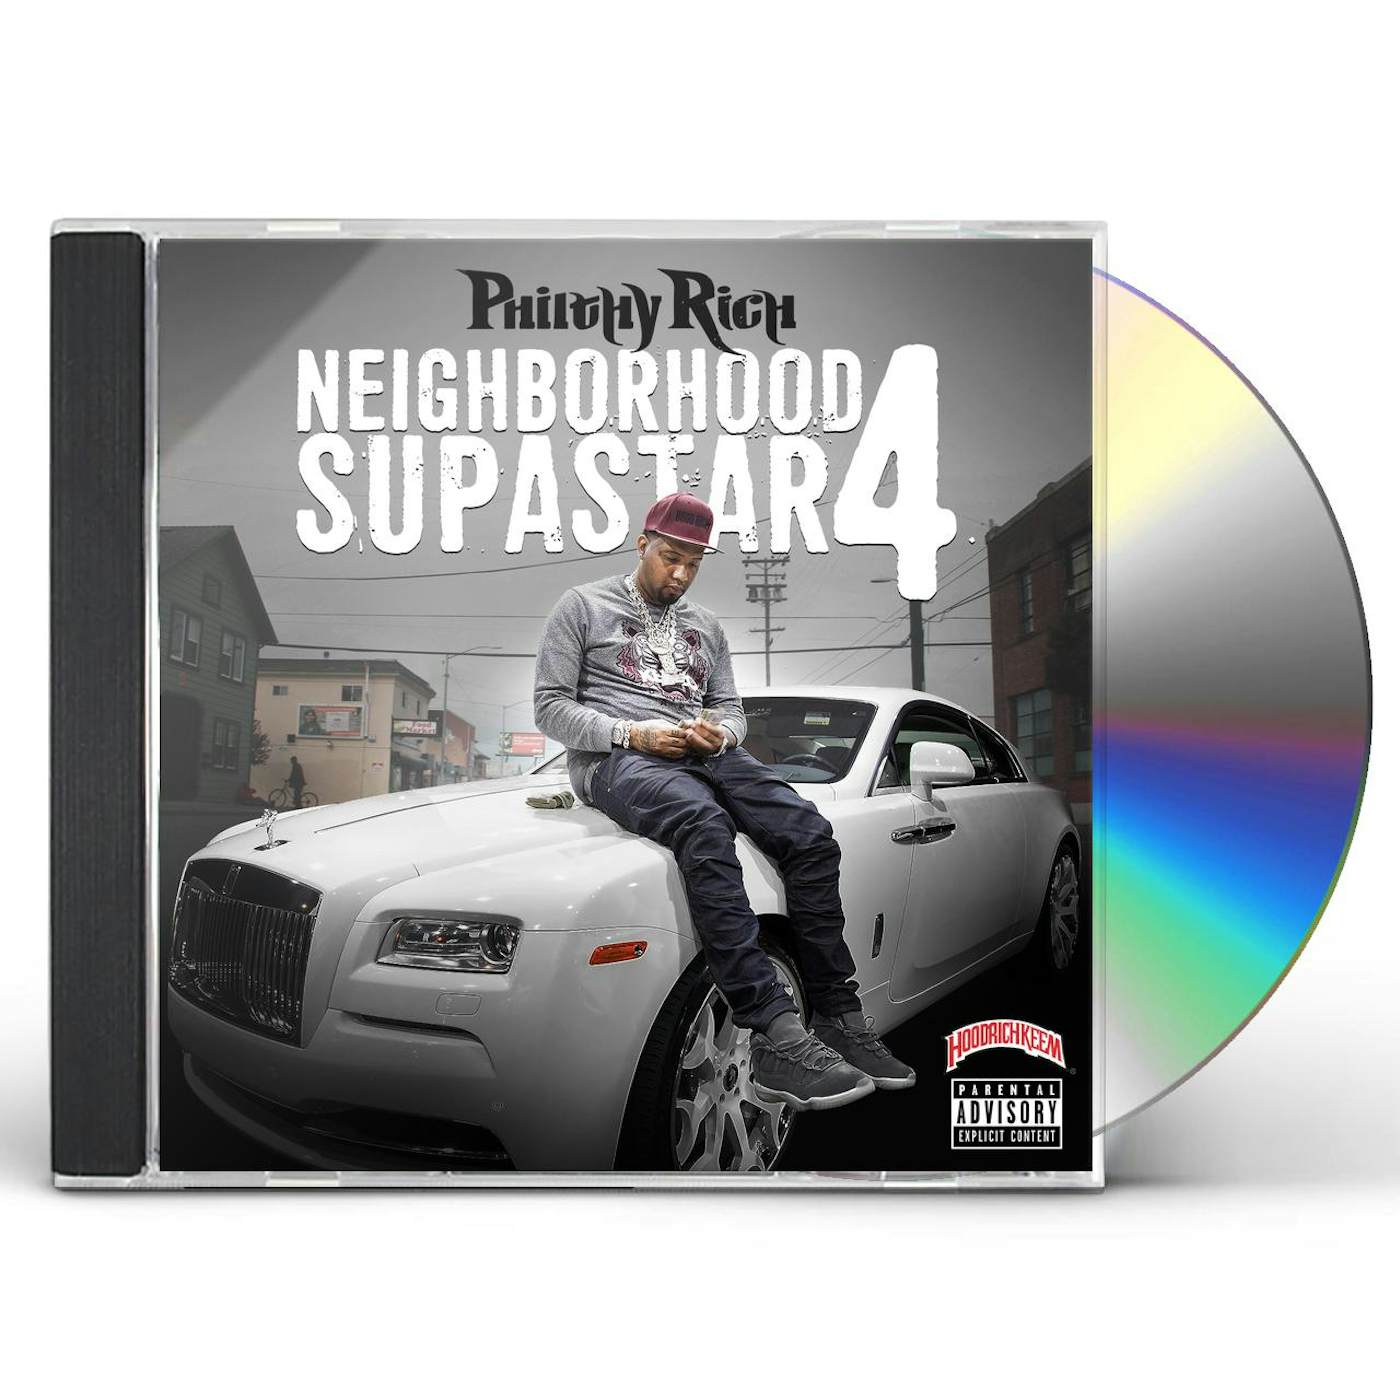 Philthy Rich NEIGHBORHOOD SUPASTAR 4 CD